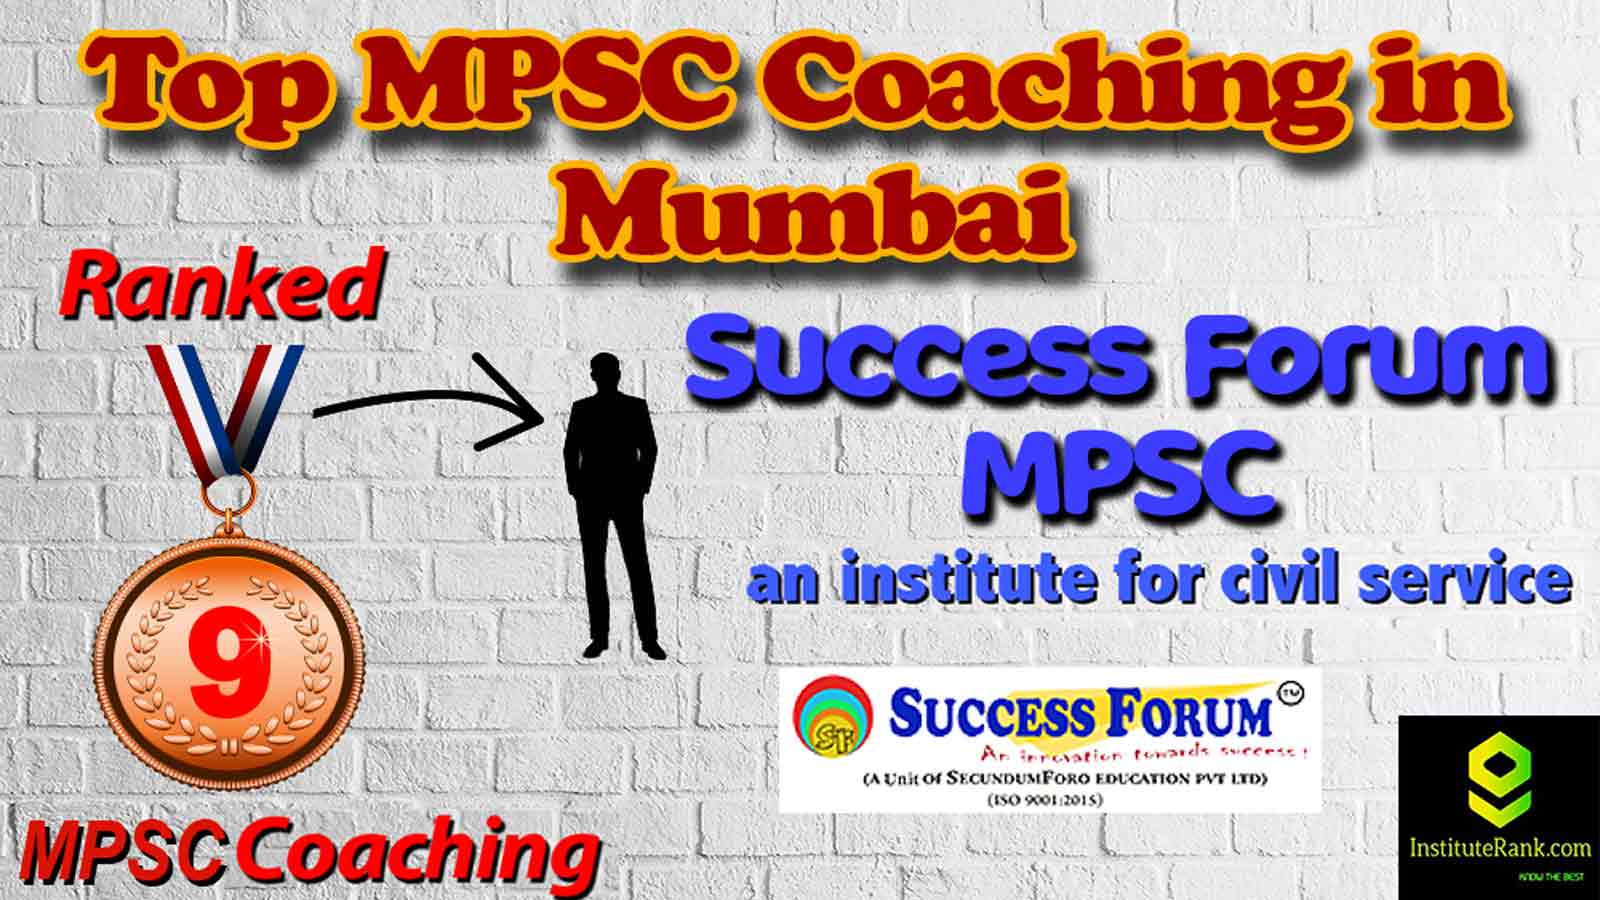 Best MPSC Coaching in Mumbai